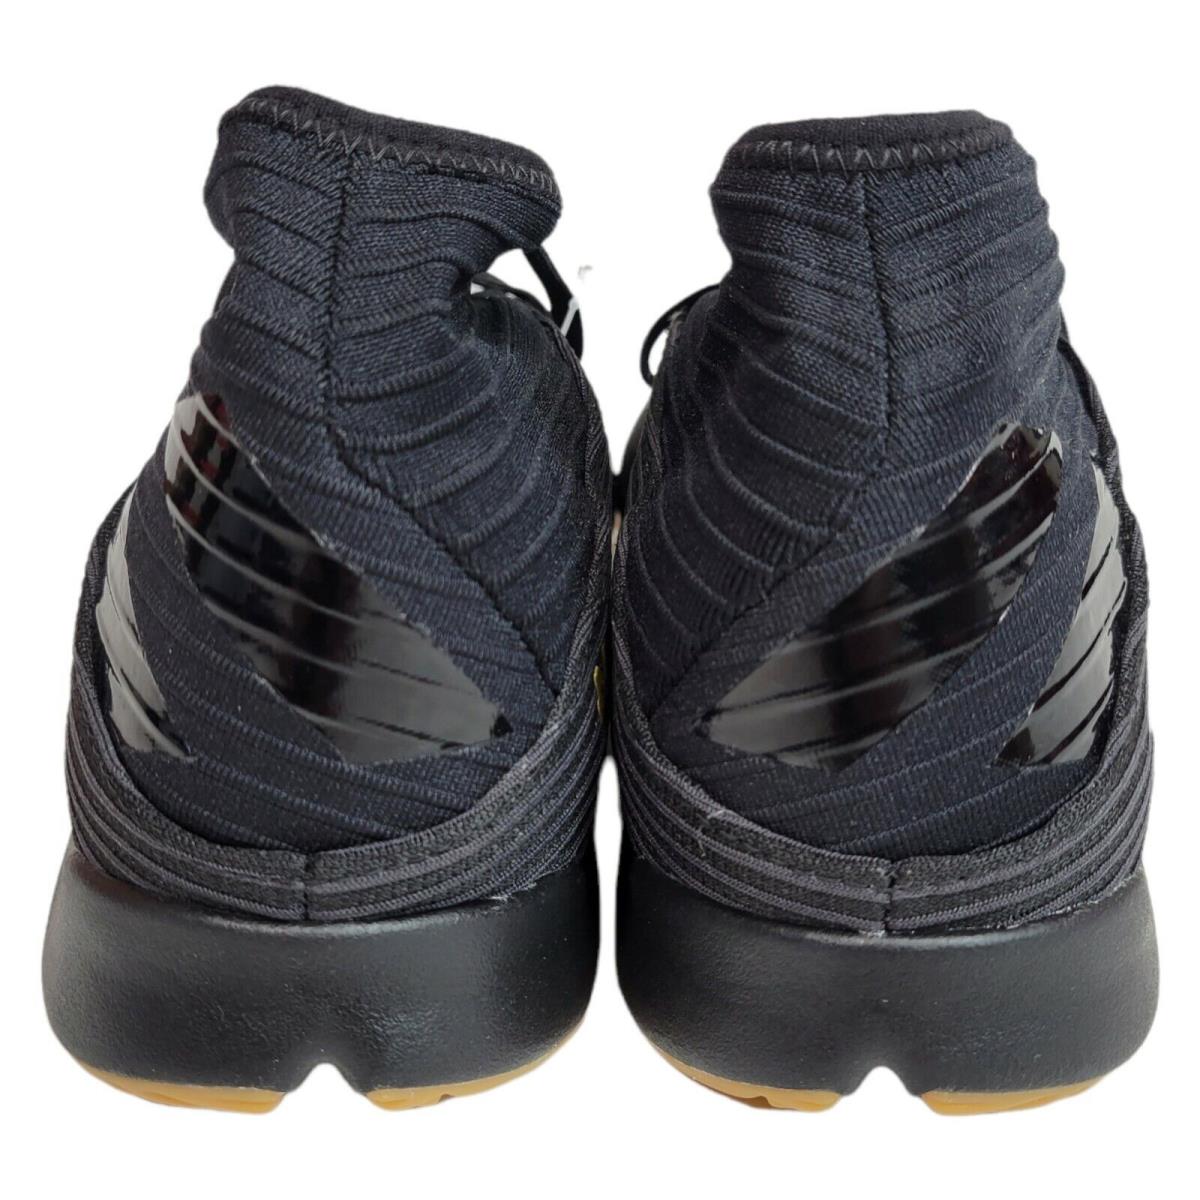 Adidas shoes Nemeziz - Black 4